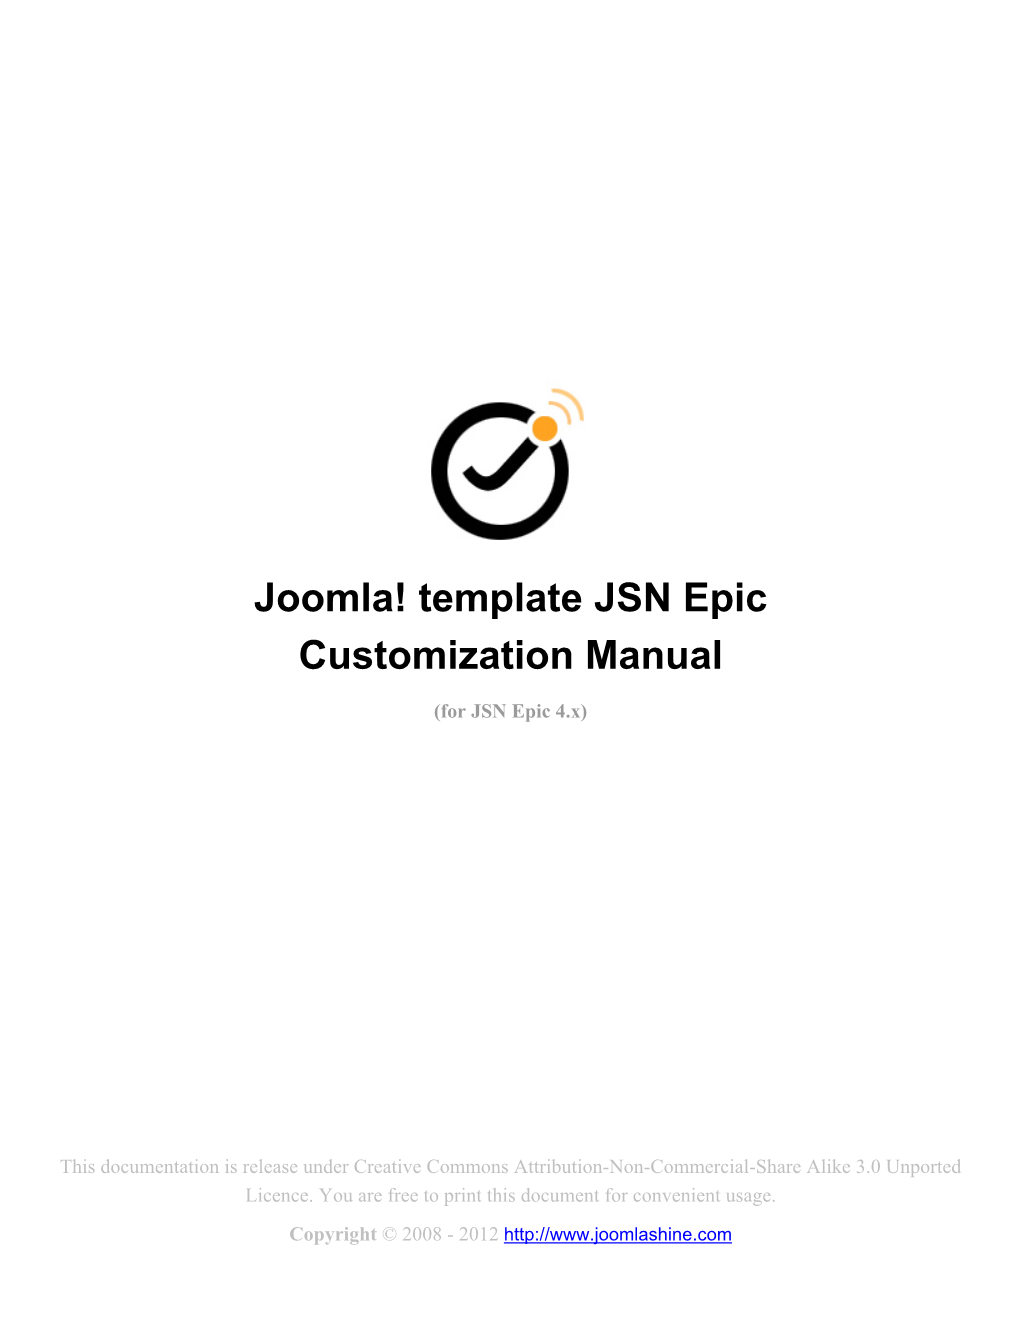 Joomla! Template JSN Epic Customization Manual